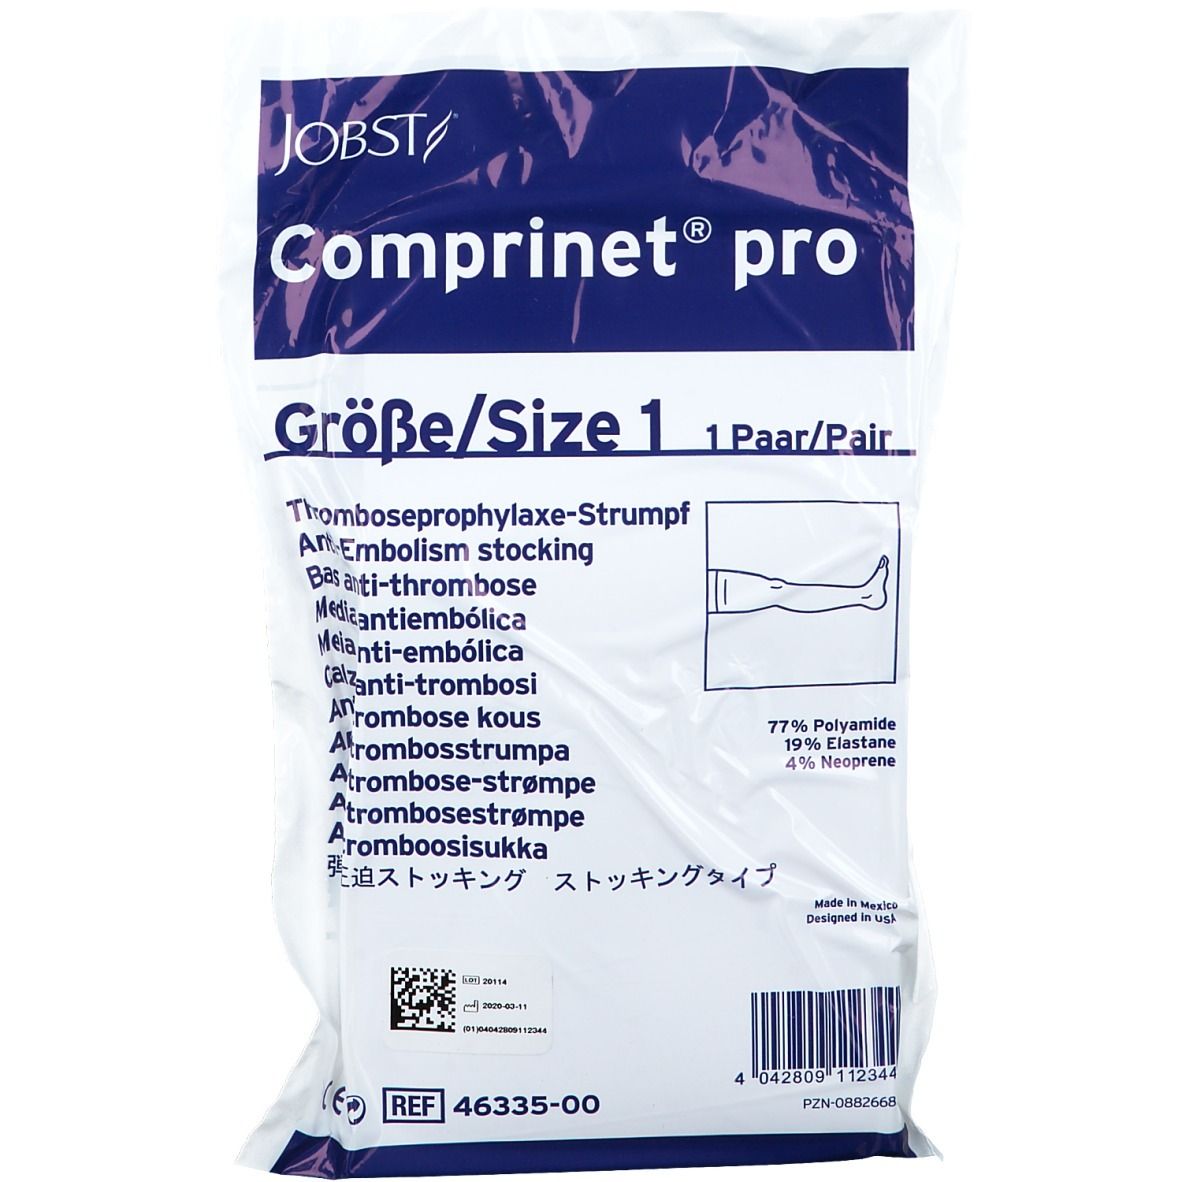 Comprinet® Pro Bas anti-thrombose Taille 1